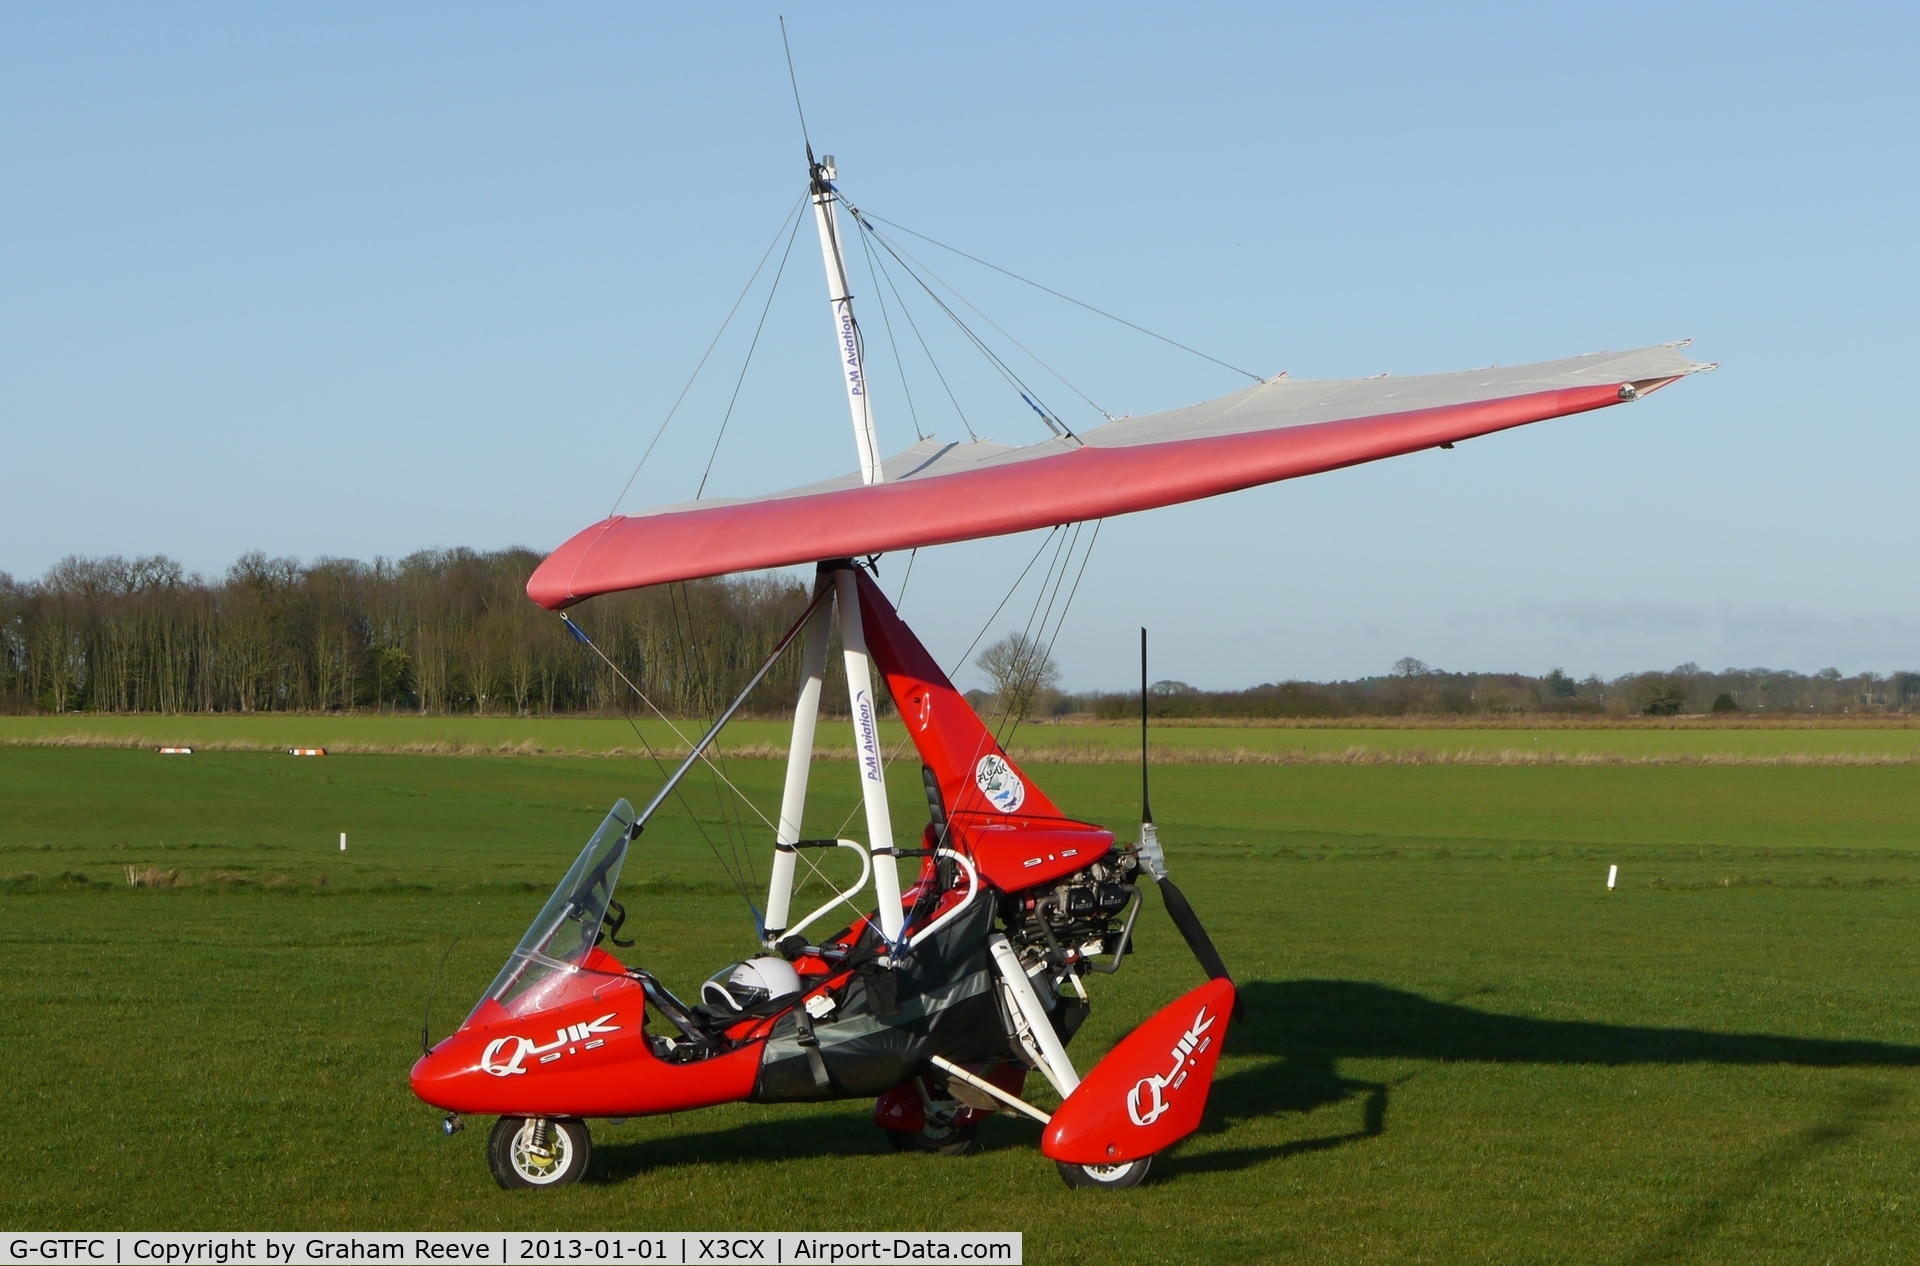 G-GTFC, 2006 P&M Aviation Pegasus Quik C/N 8184, Parked at Northrepps.